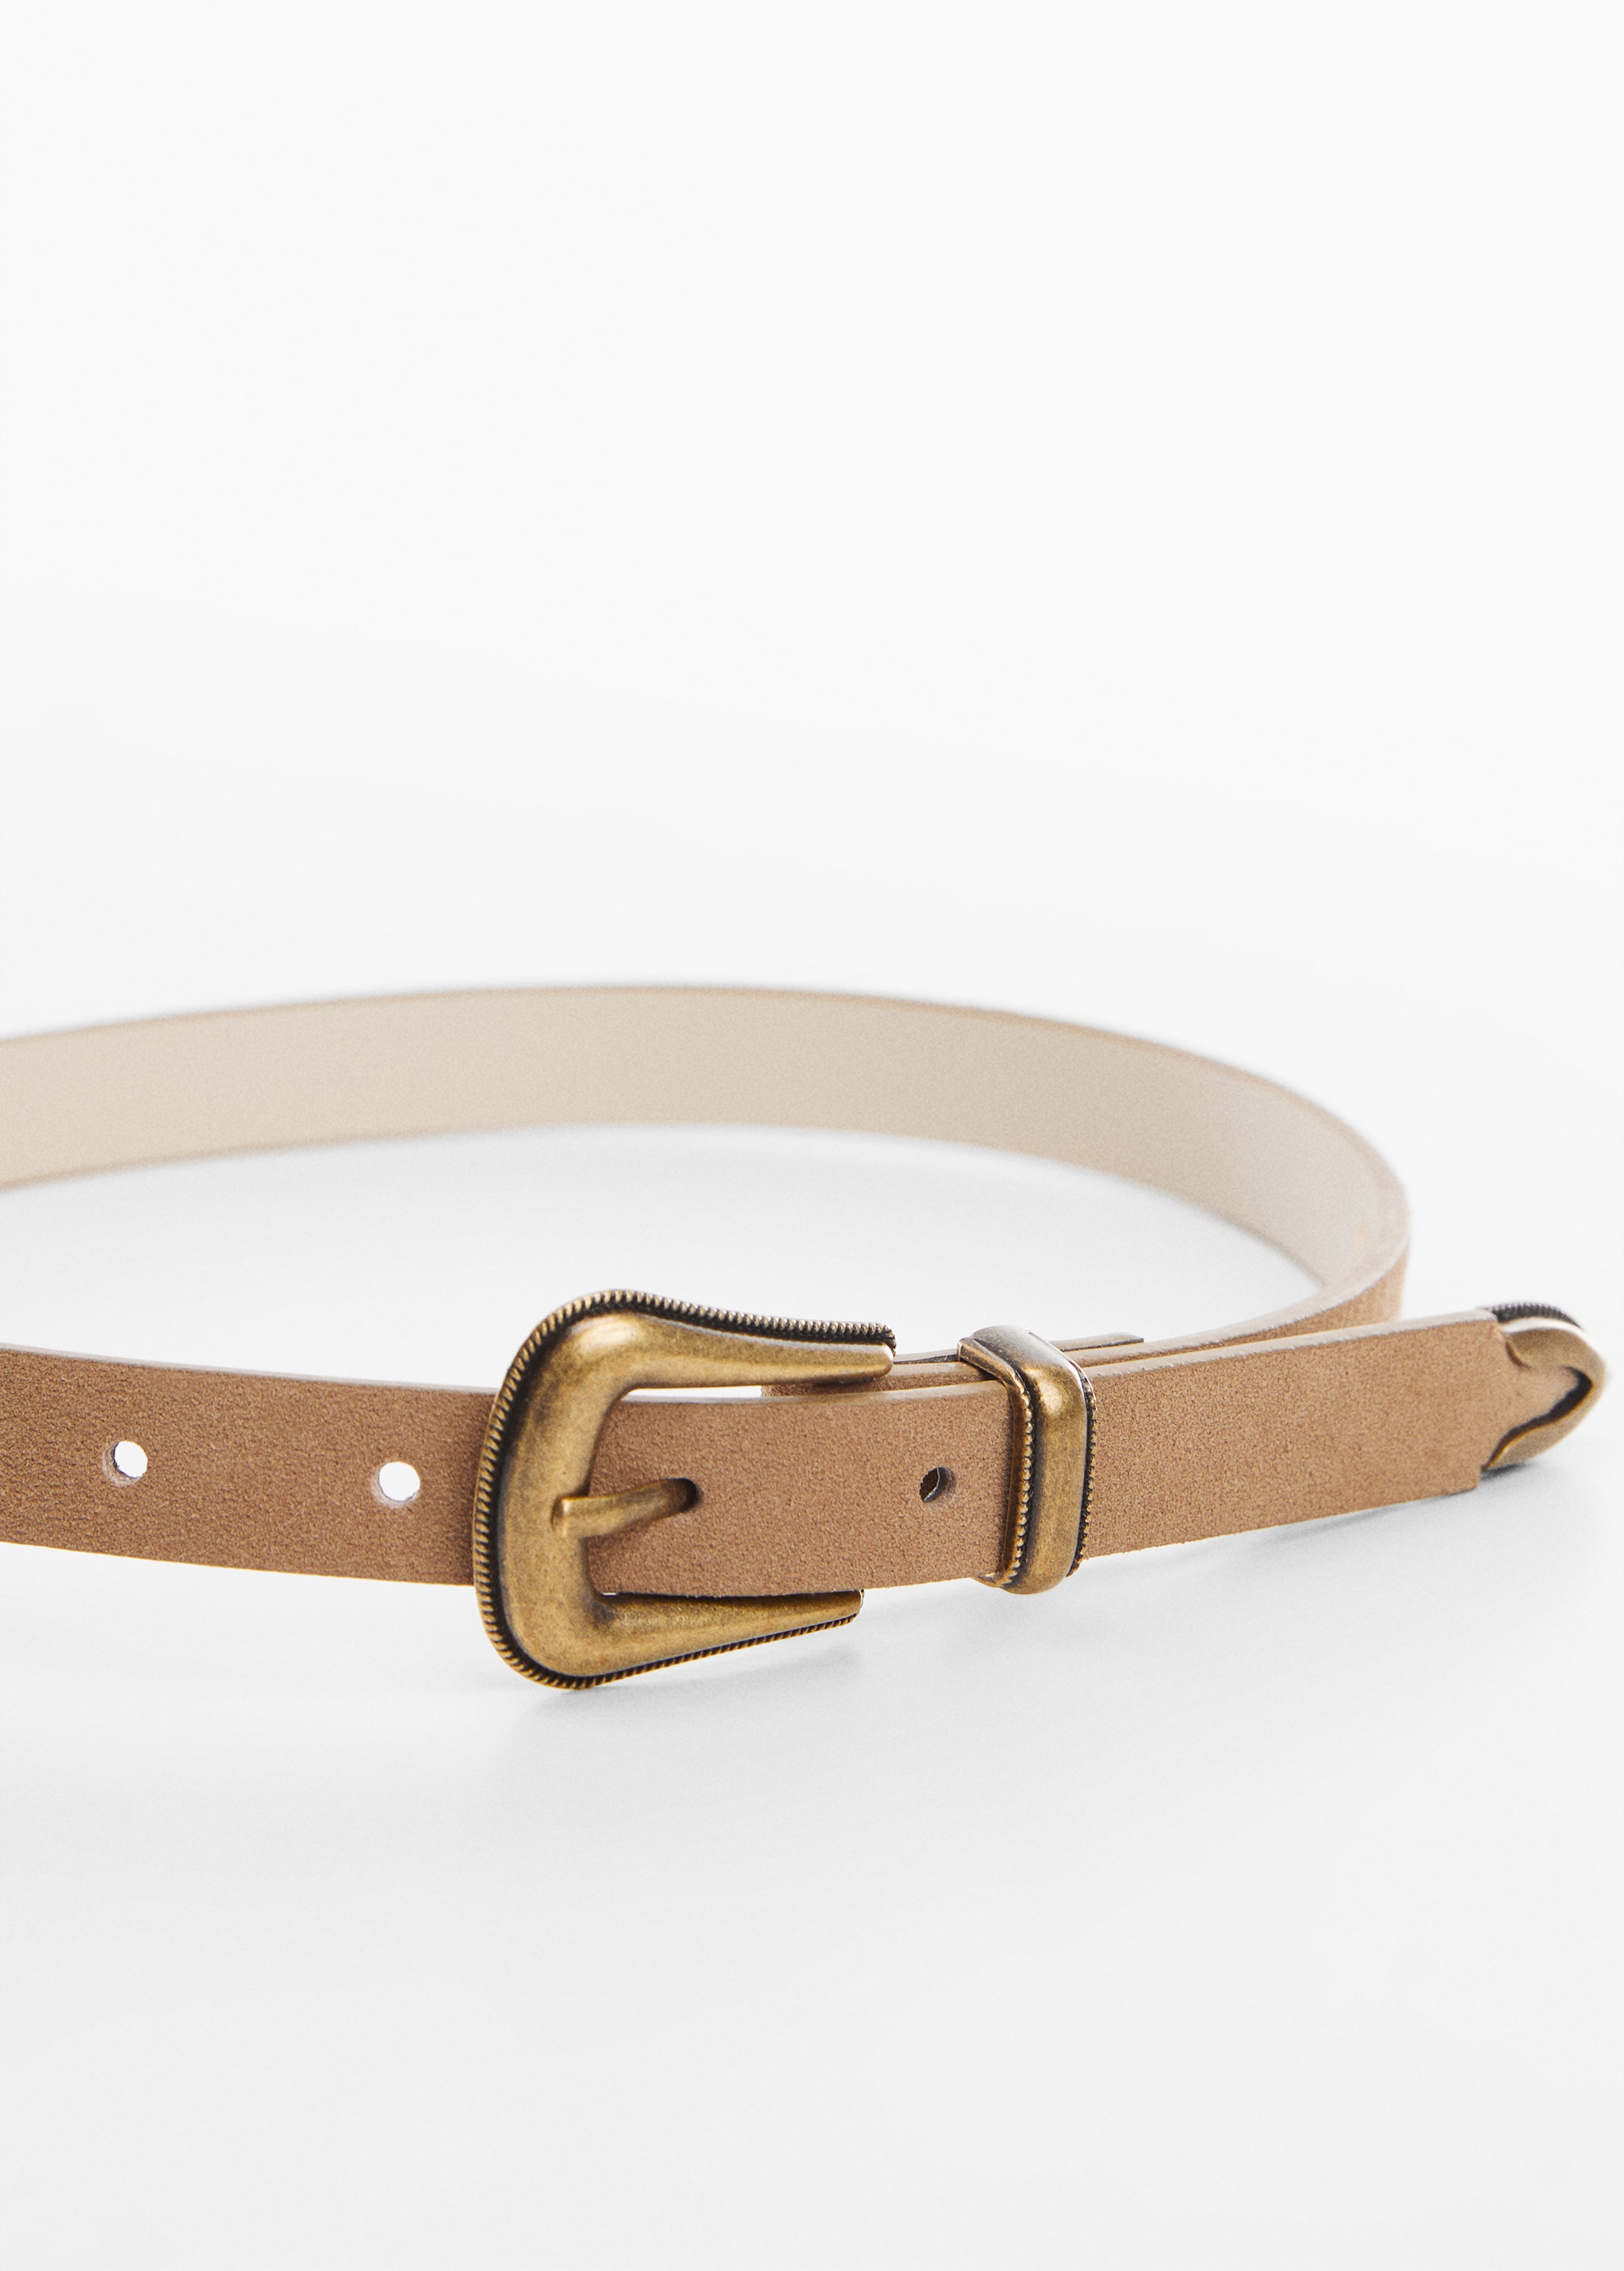 Buckle leather belt - Medium plane